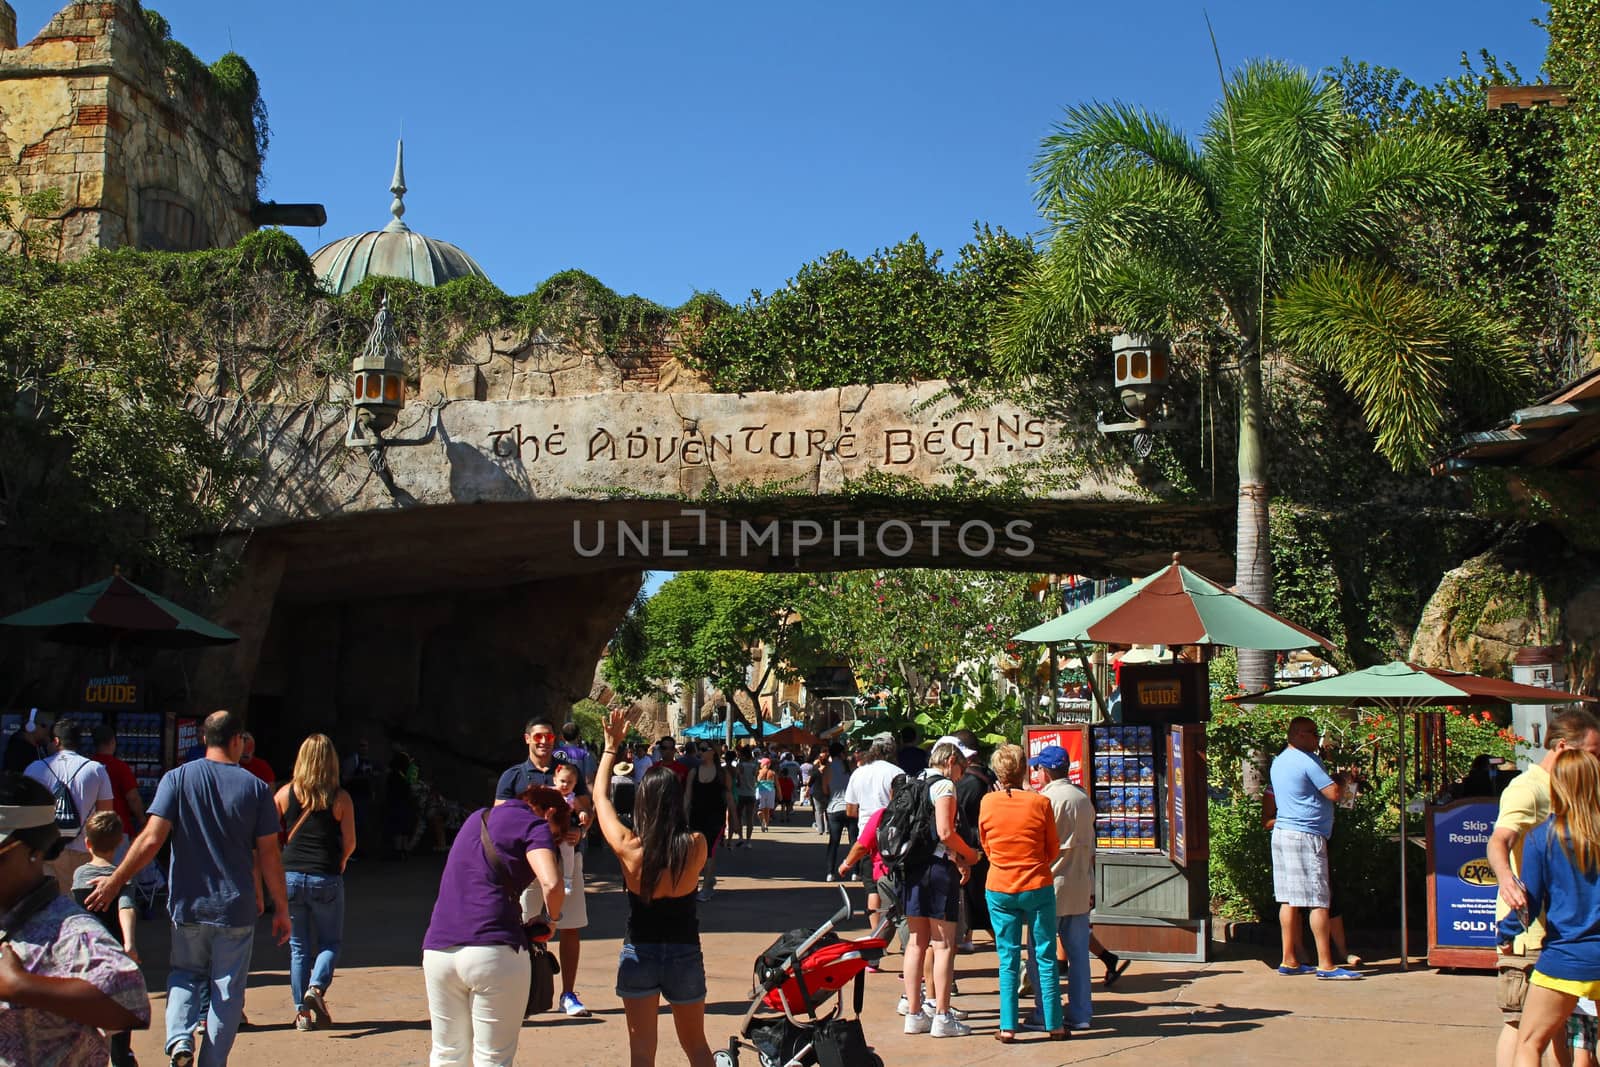 ORLANDO - OCT 25 :  The entrance to Universal Studios Islands of Adventure theme park. Taken October 25, 2013 in Orlando, FL.